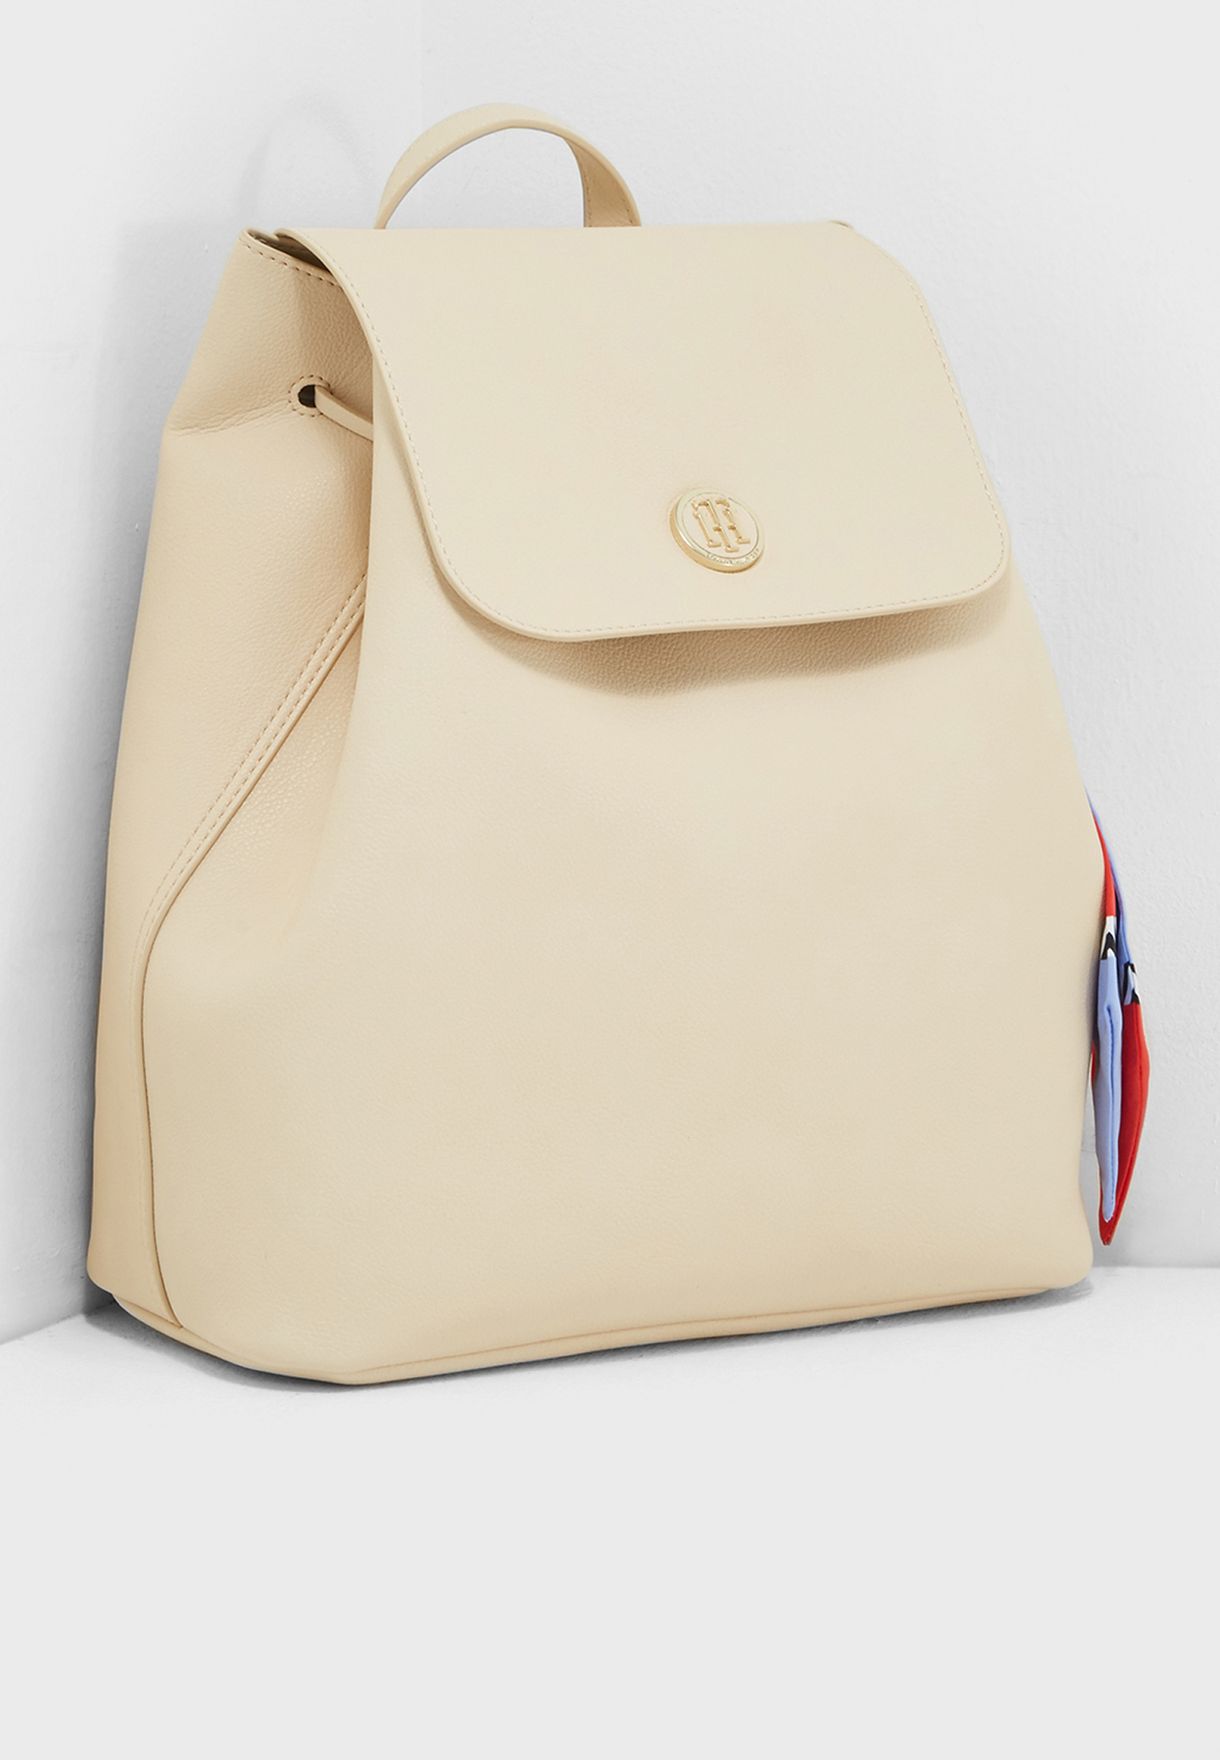 charming backpack tommy hilfiger